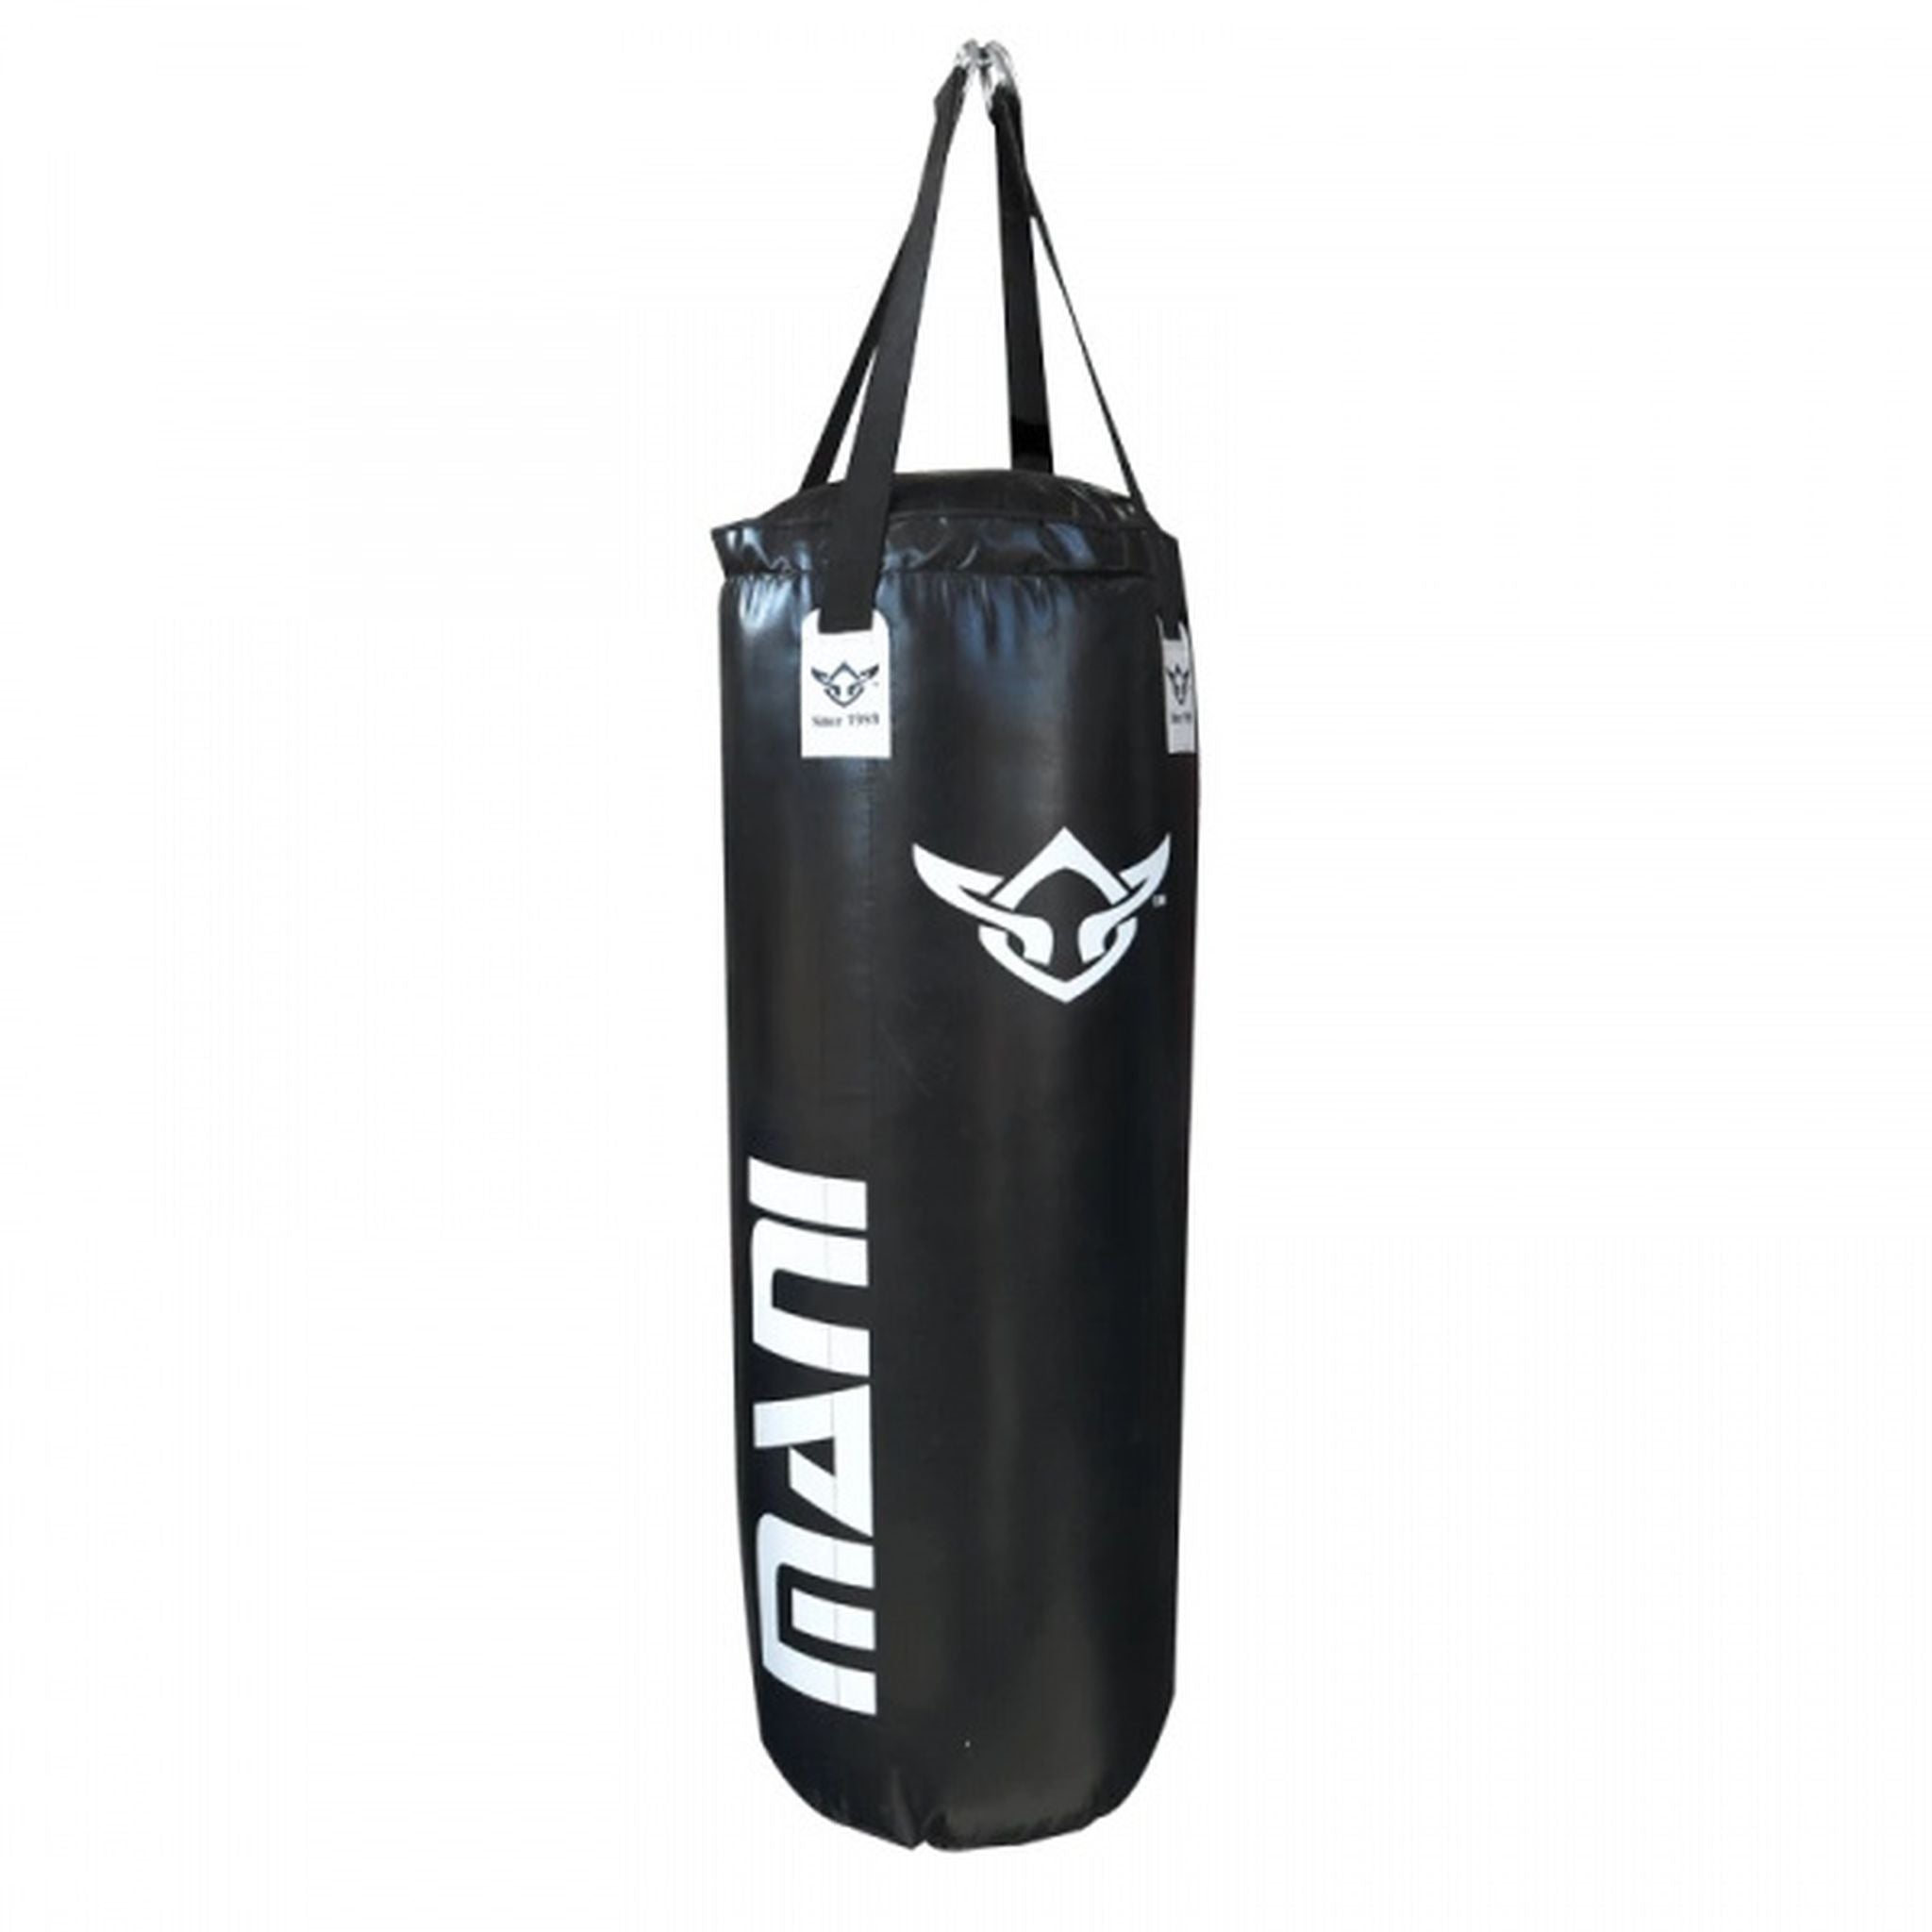 MANI 6ft Commercial Grad Boxing Bag